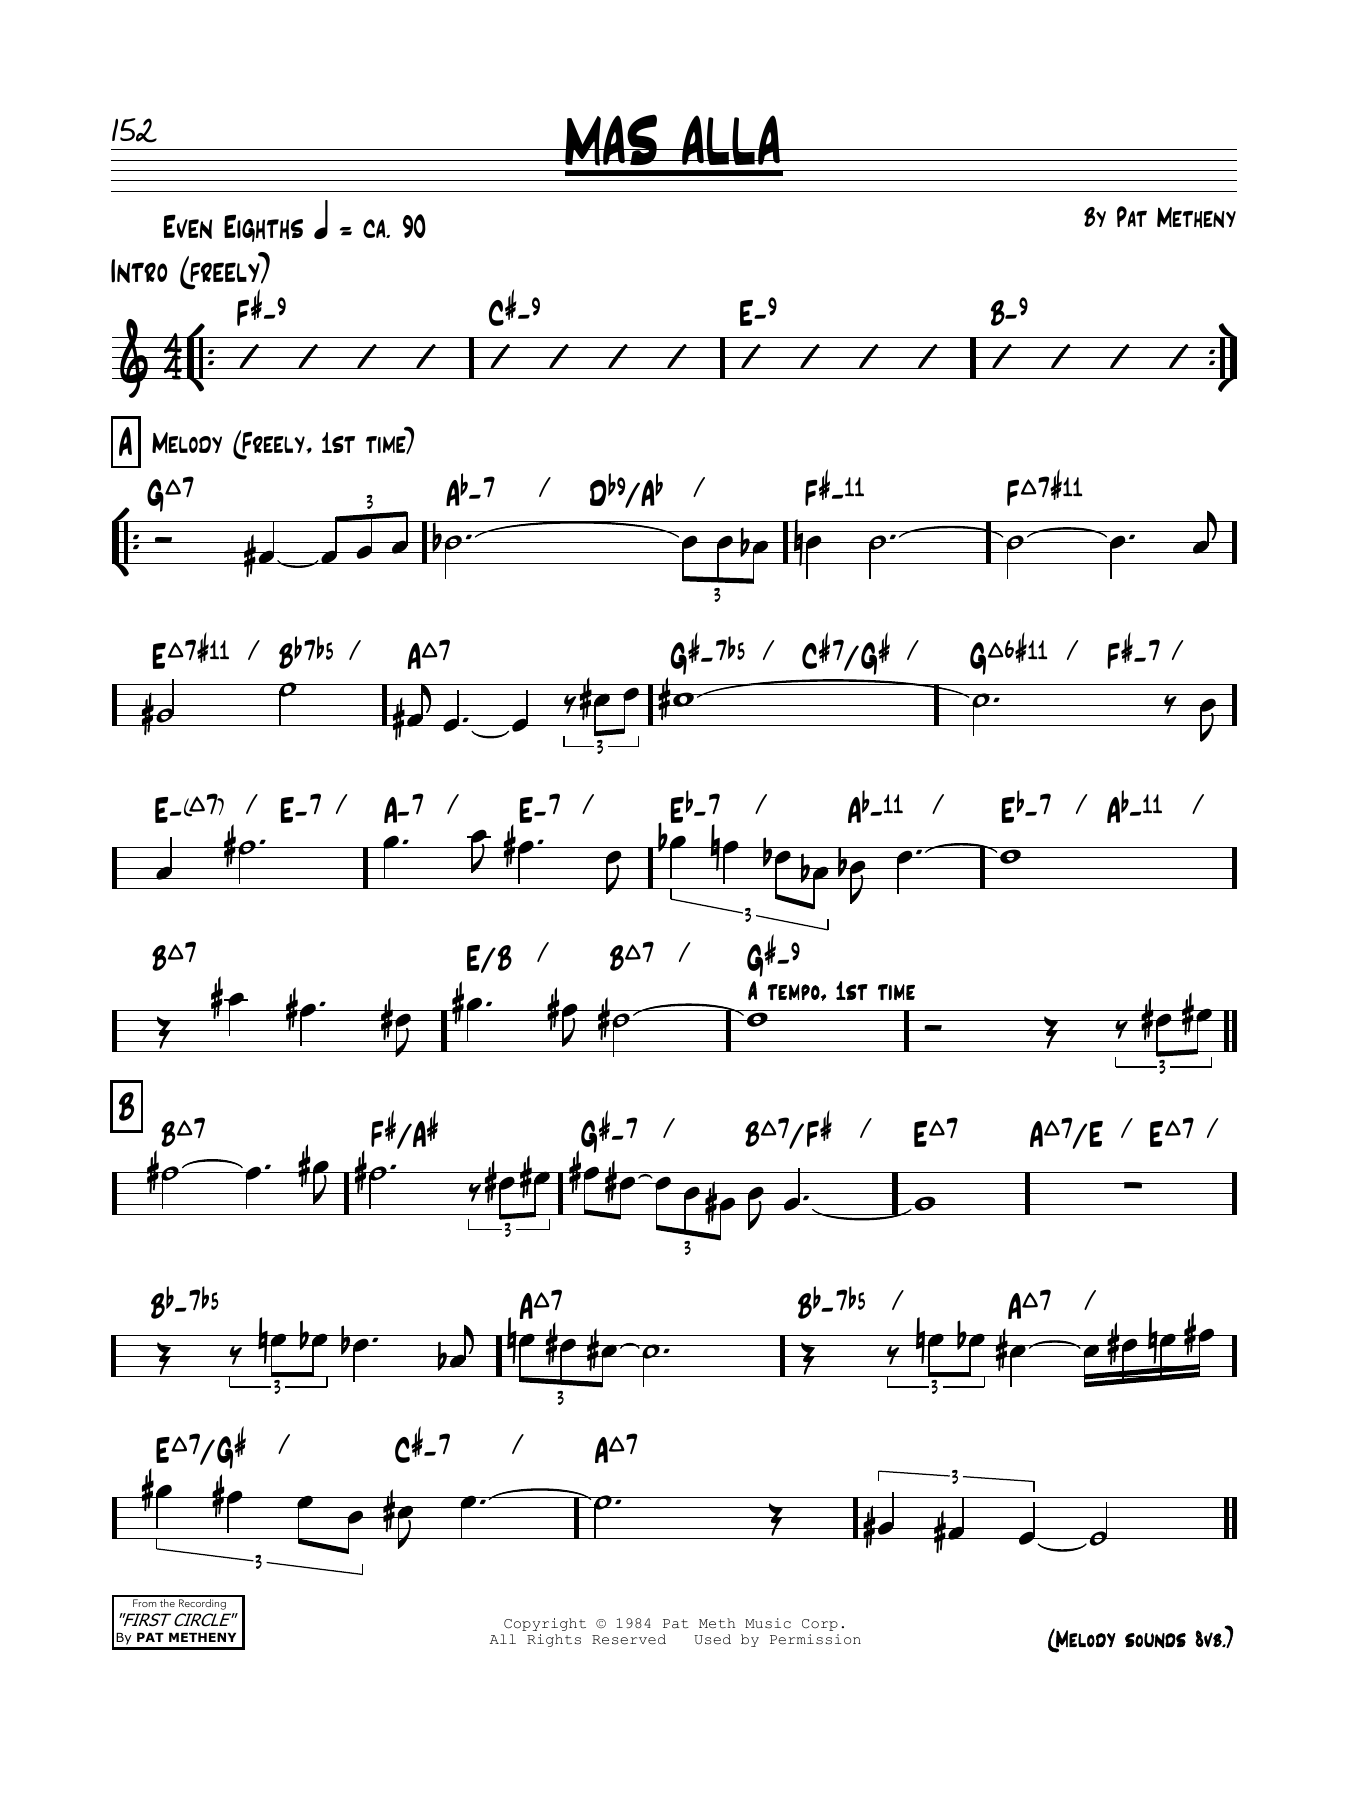 Pat Metheny Mas Alla Sheet Music Notes & Chords for Real Book – Melody & Chords - Download or Print PDF